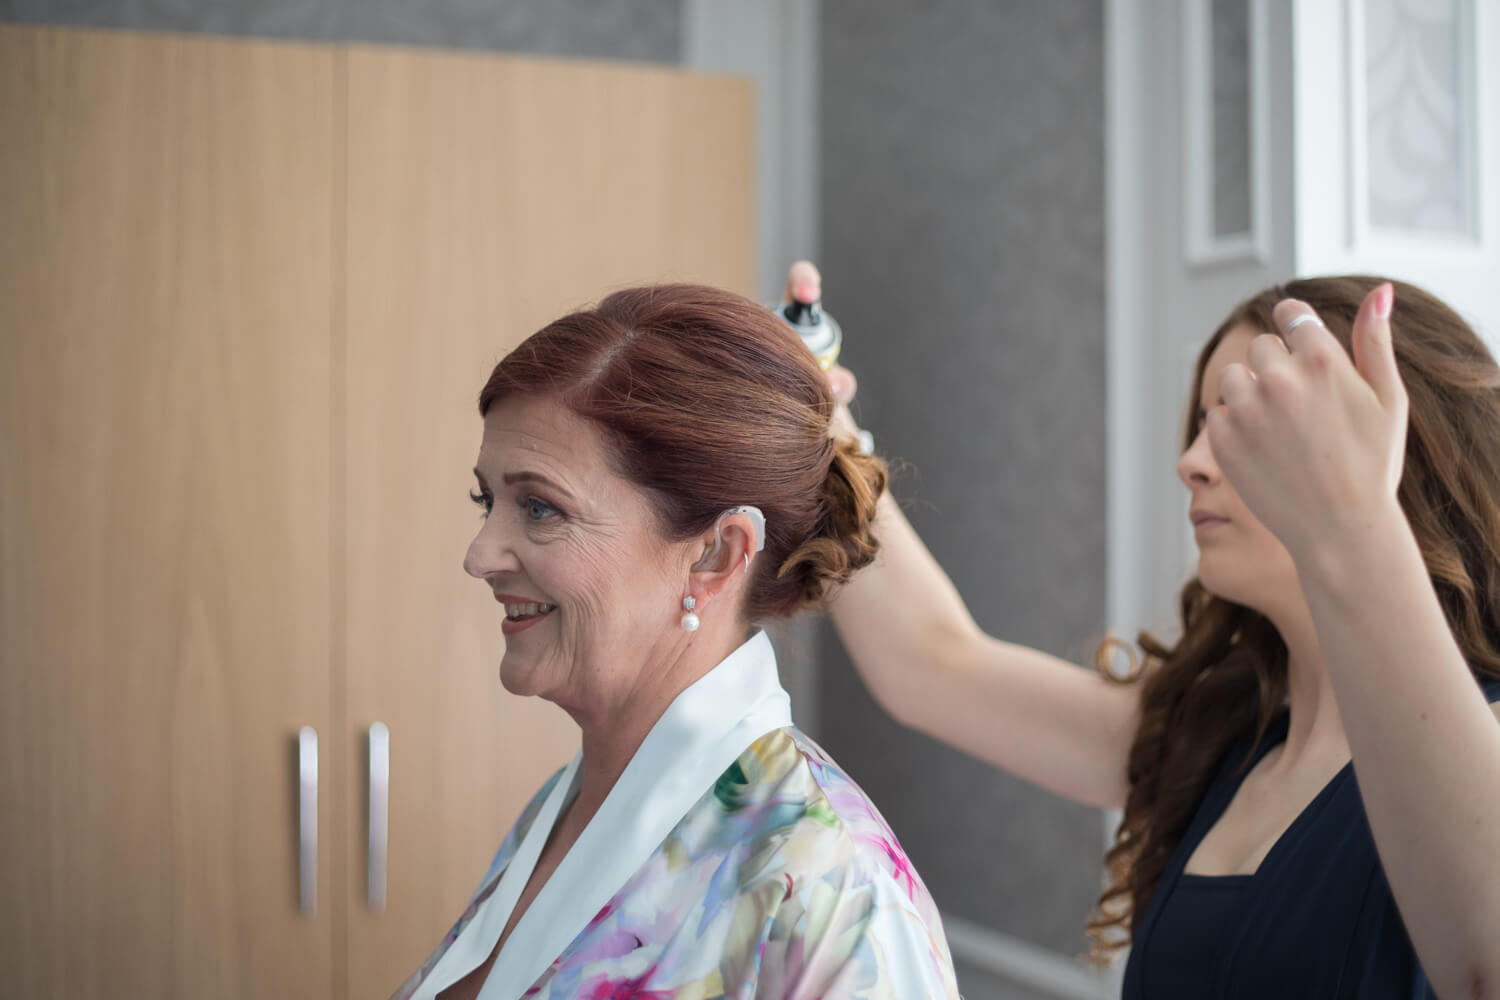 the hairdresser sprays the bride's updo